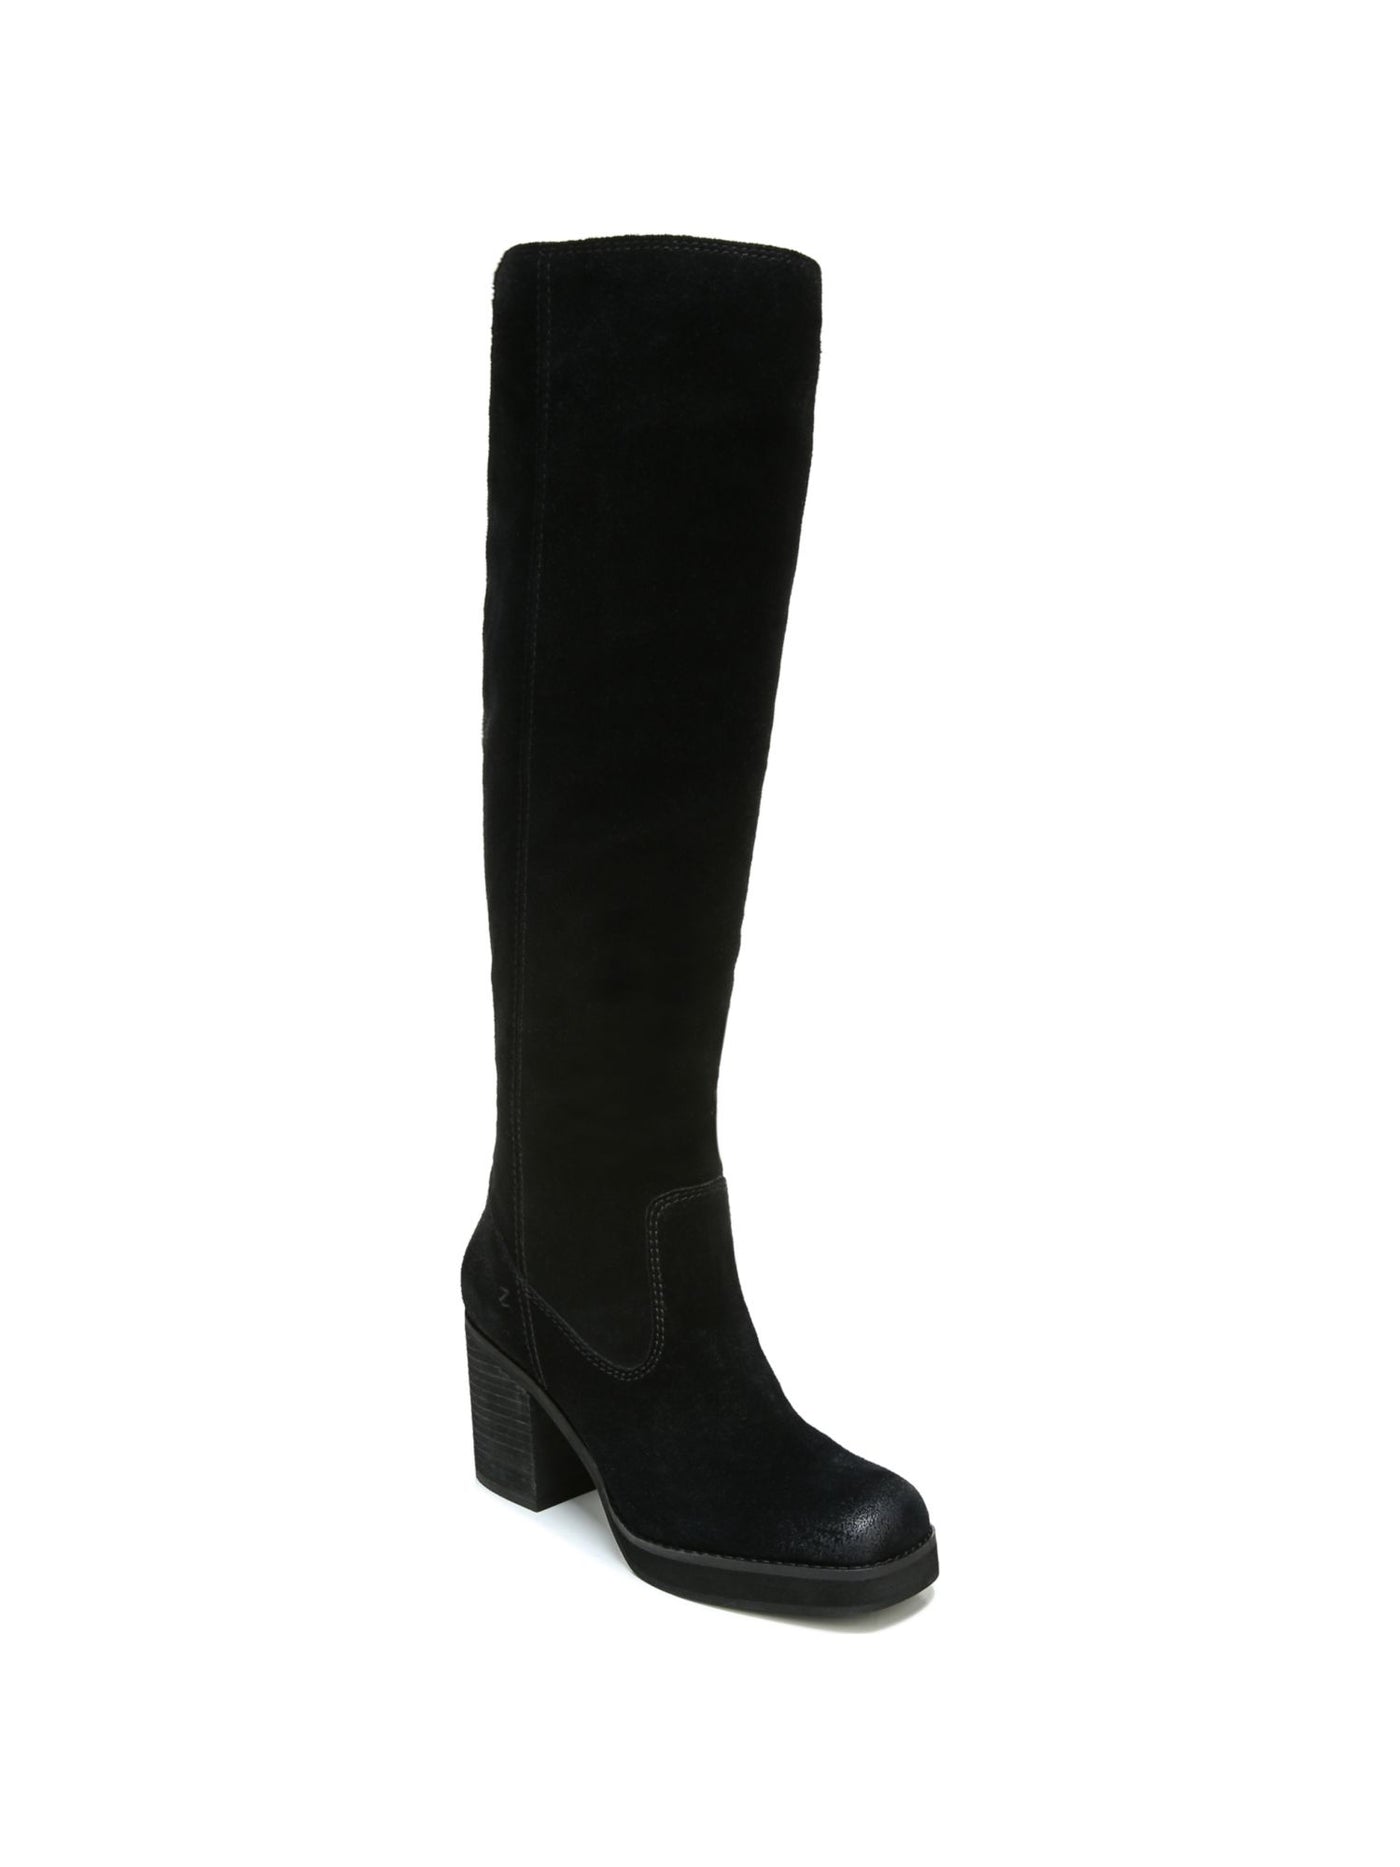 ZODIAC Womens Black Cushioned Padma Round Toe Dress Boots Shoes 7.5 M